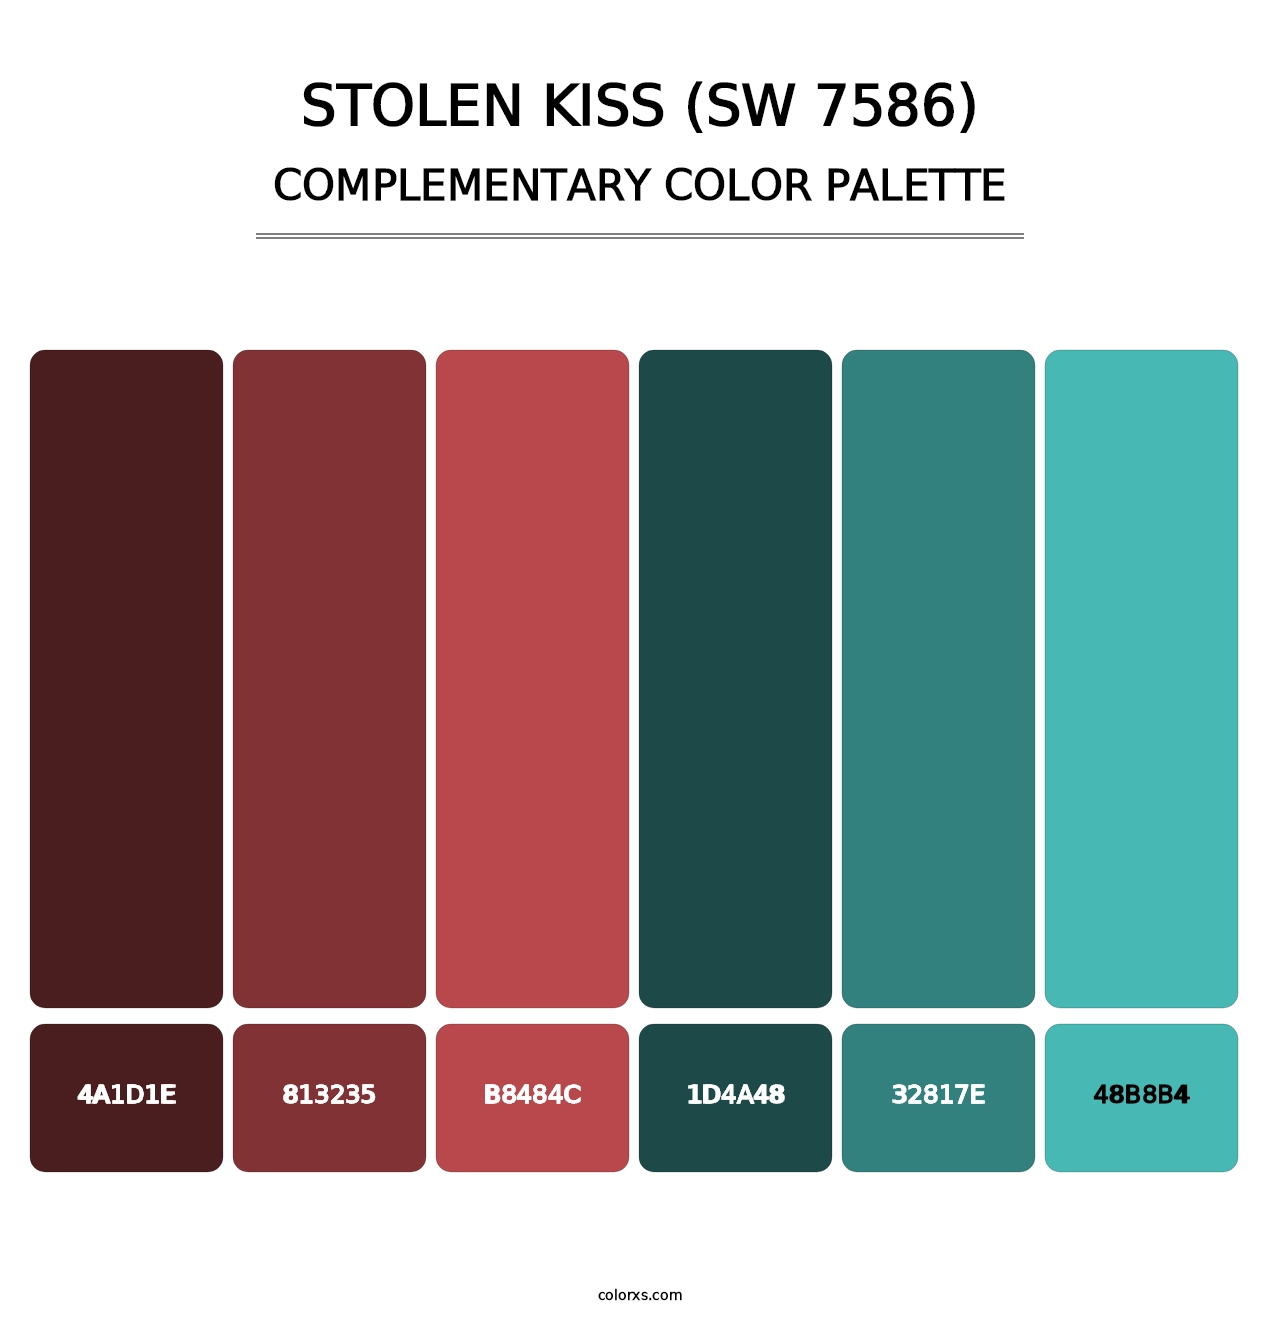 Stolen Kiss (SW 7586) - Complementary Color Palette